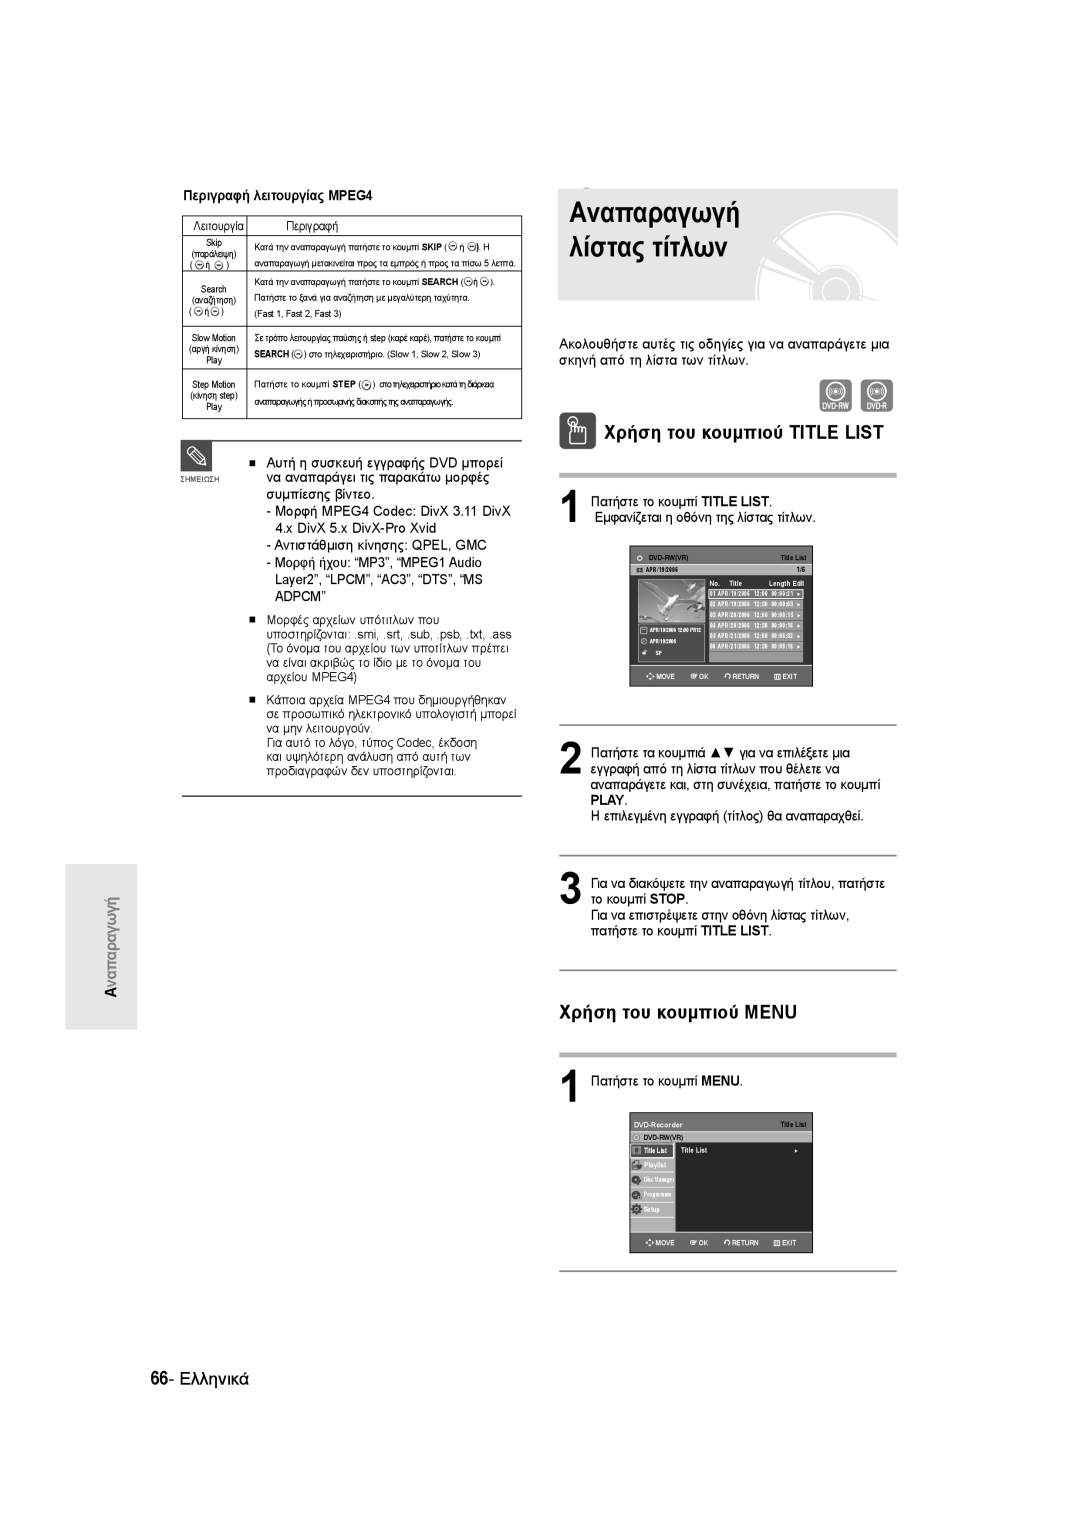 Samsung DVD-R135/EUR manual Χρήση του κουμπιού Title List, Χρήση του κουμπιού Μενu, 66- Ελληνικά, Πατήστε το κουμπί Menu 